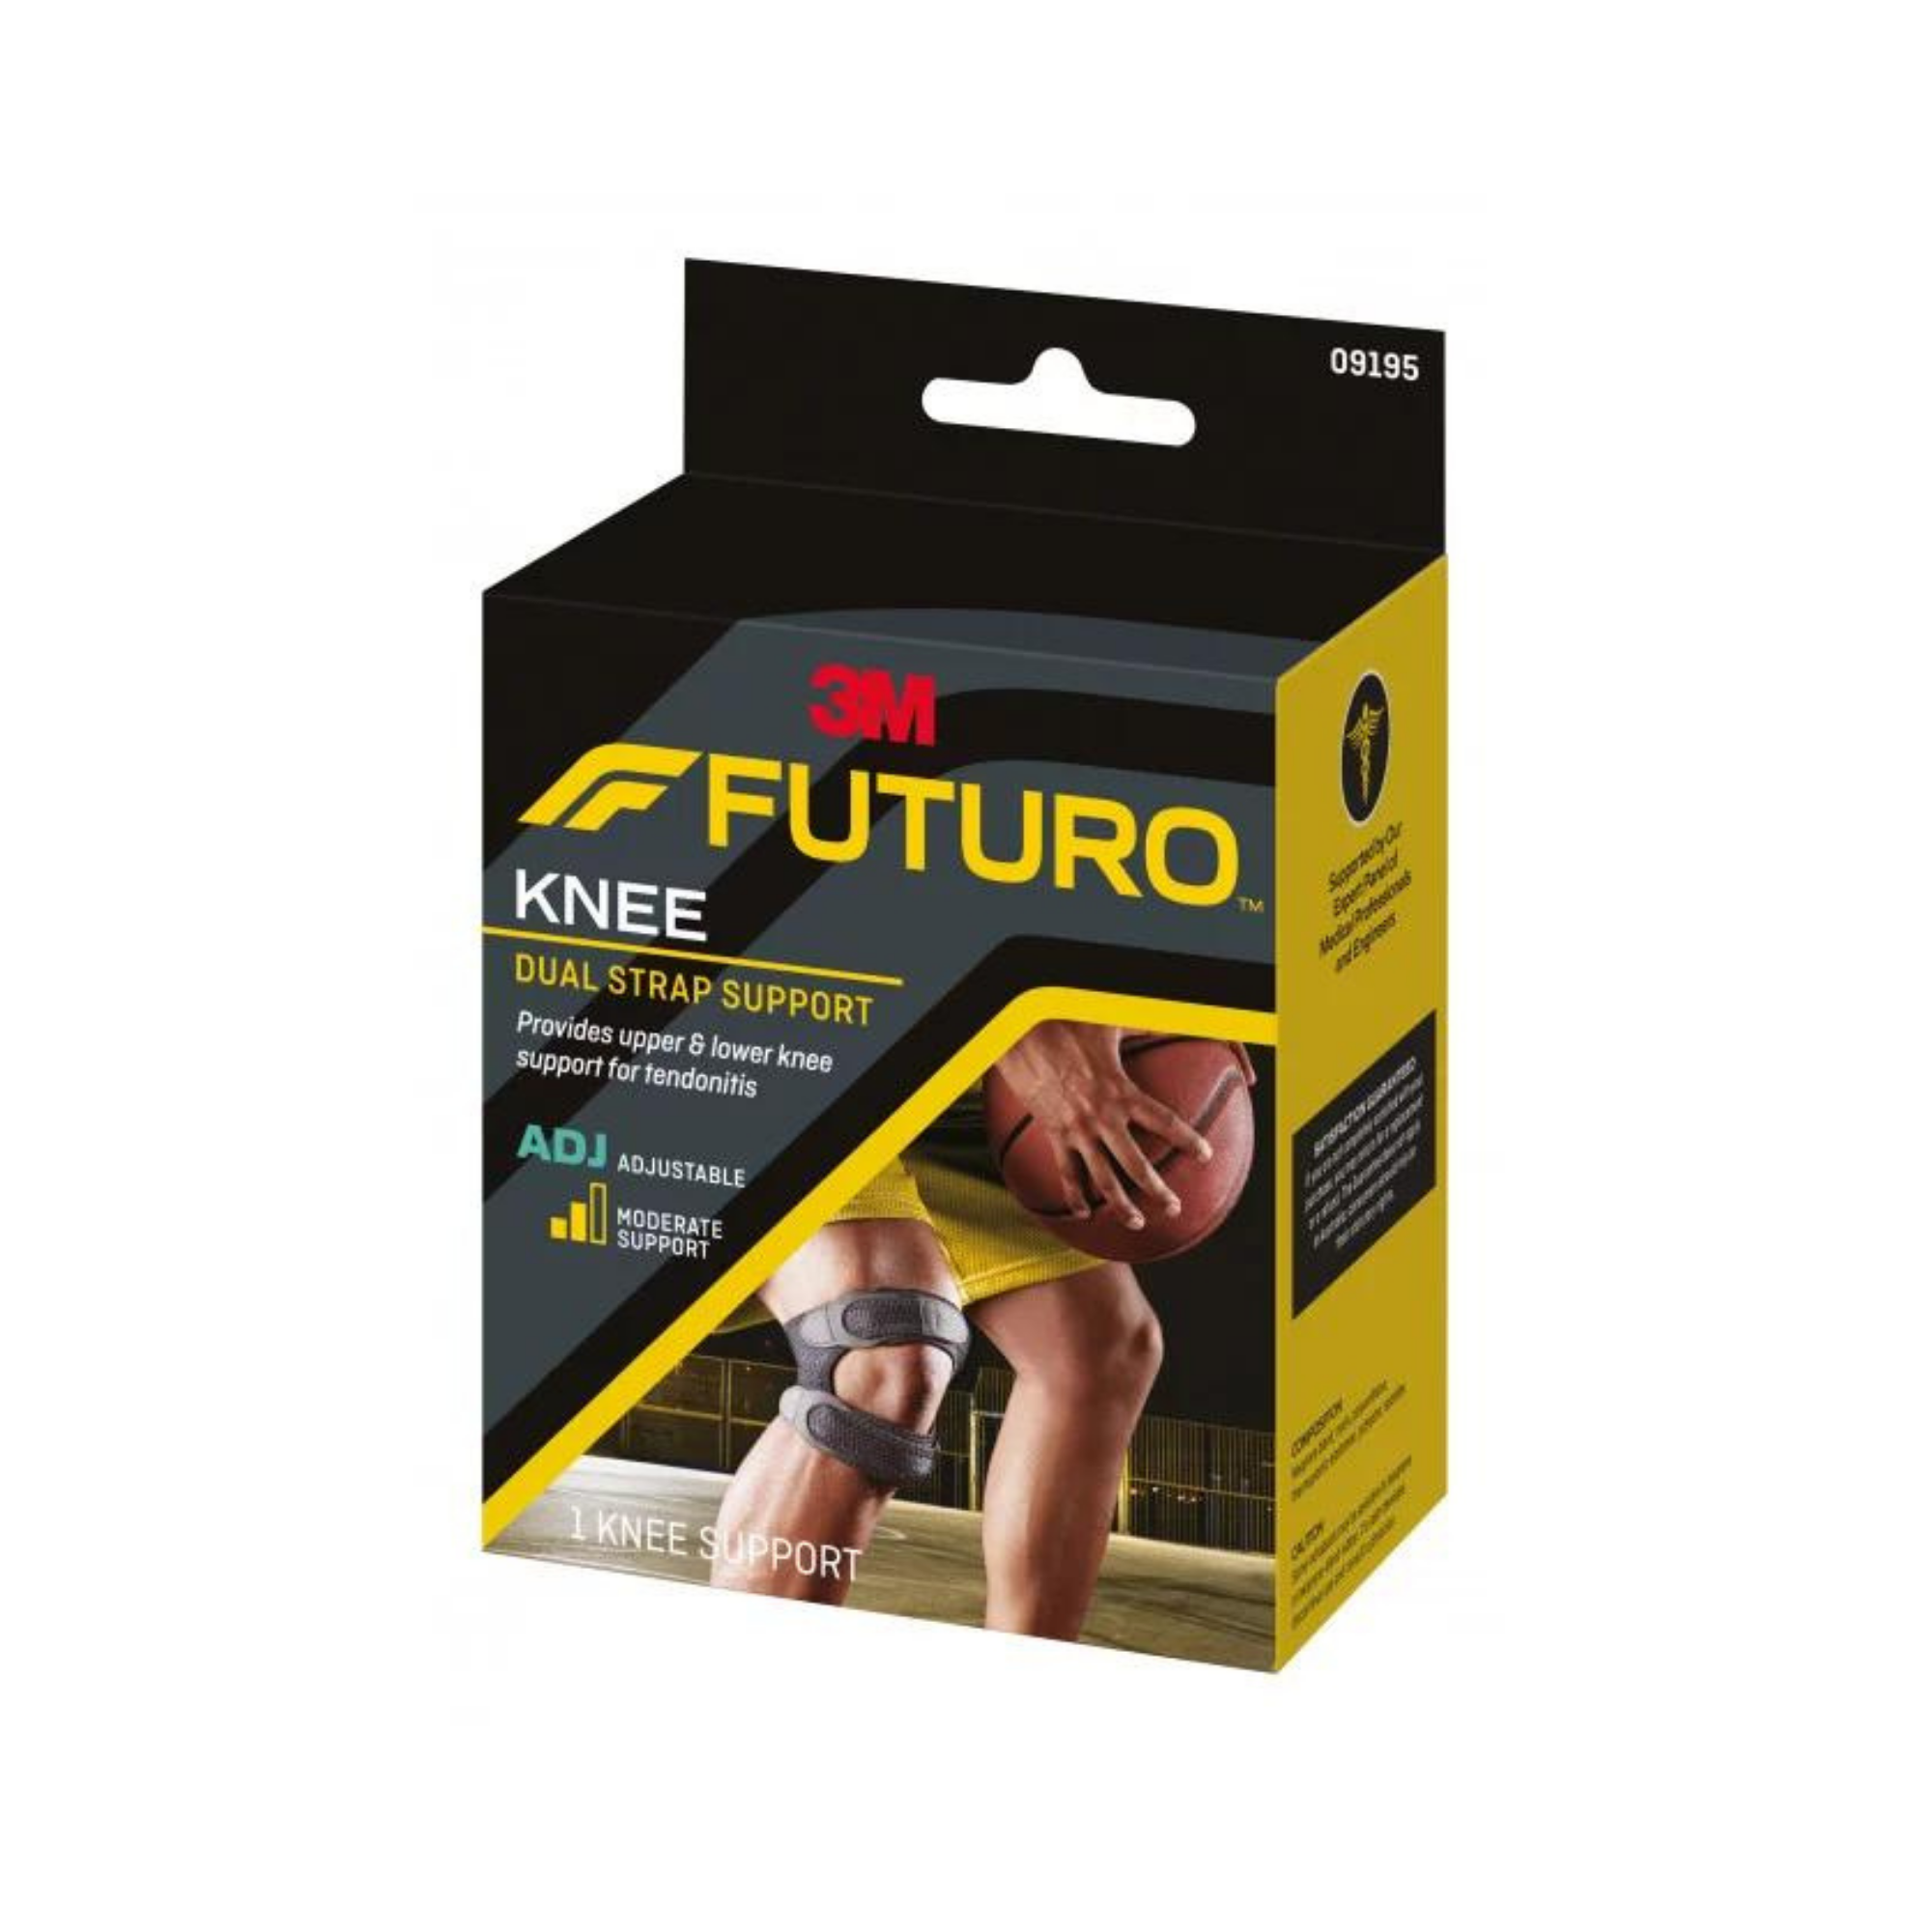 Futuro Dual Strap Knee Support 09195ENR Adjustable